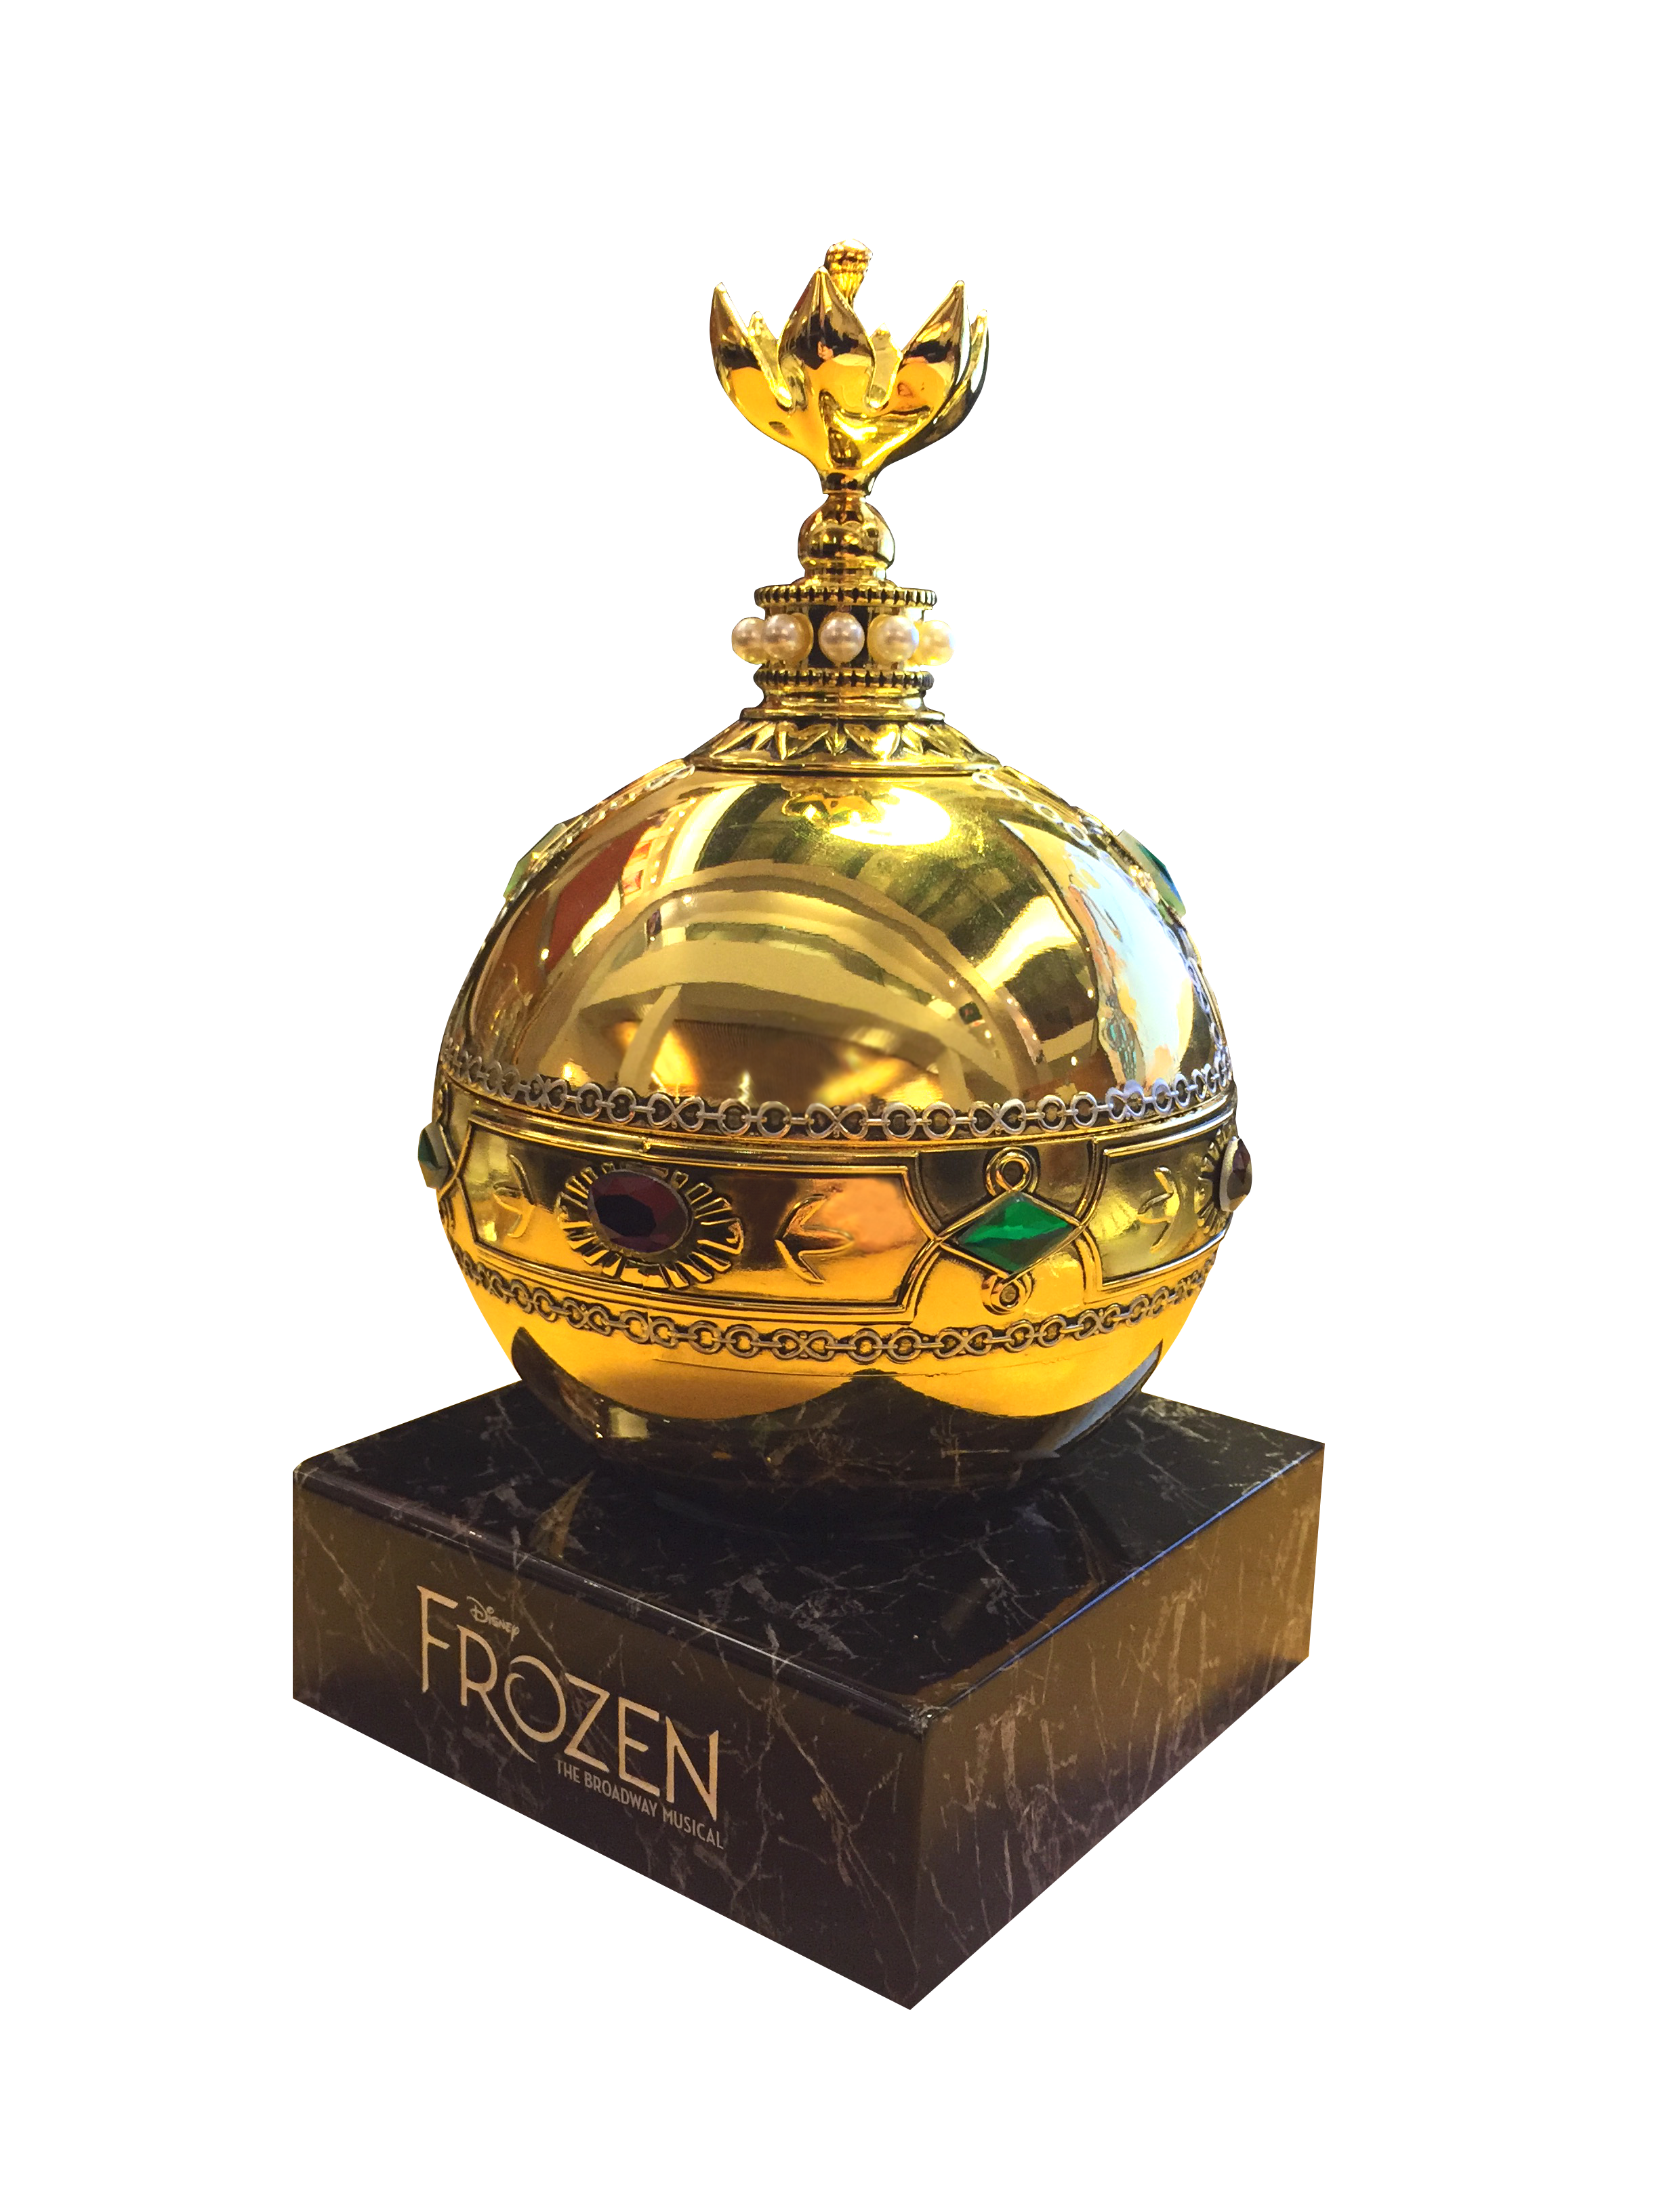 Frozen the Broadway Musical Coronation Orb Jewelry Box